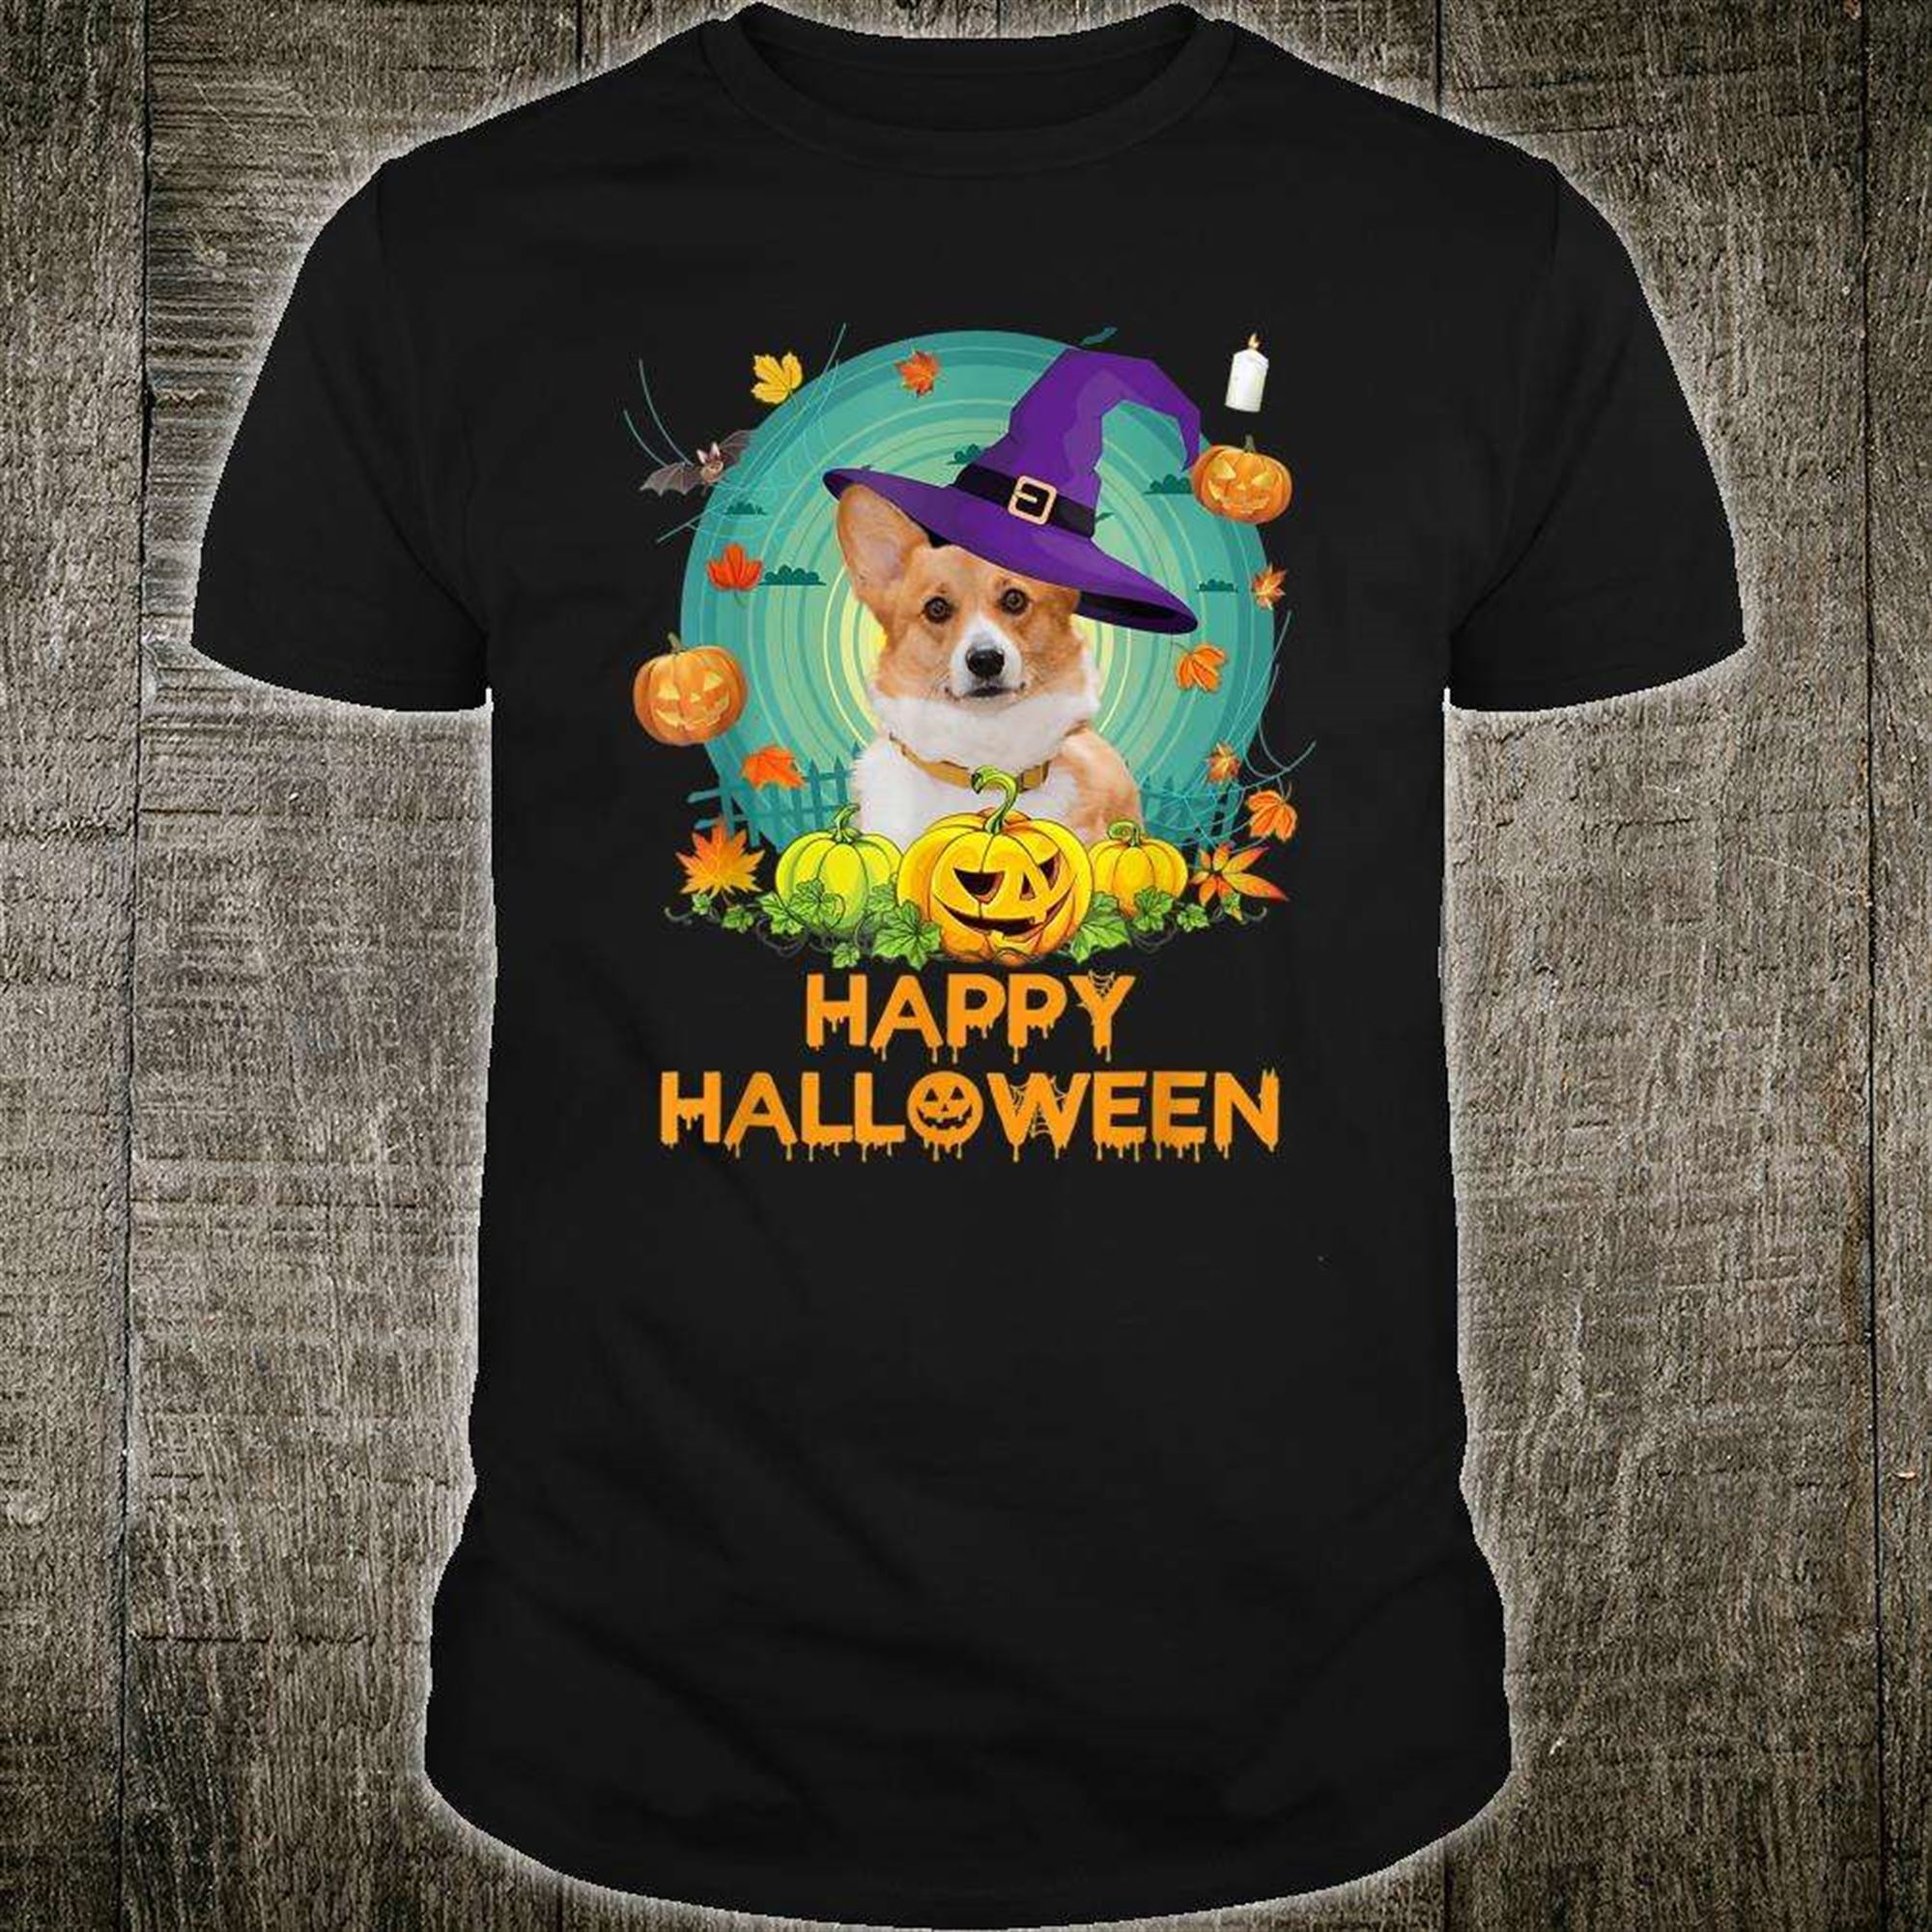 Happy Halloween Welsh Corgi Dog Witch Pumpkin Ghost Cute T-shirt Full Size Up To 5xl